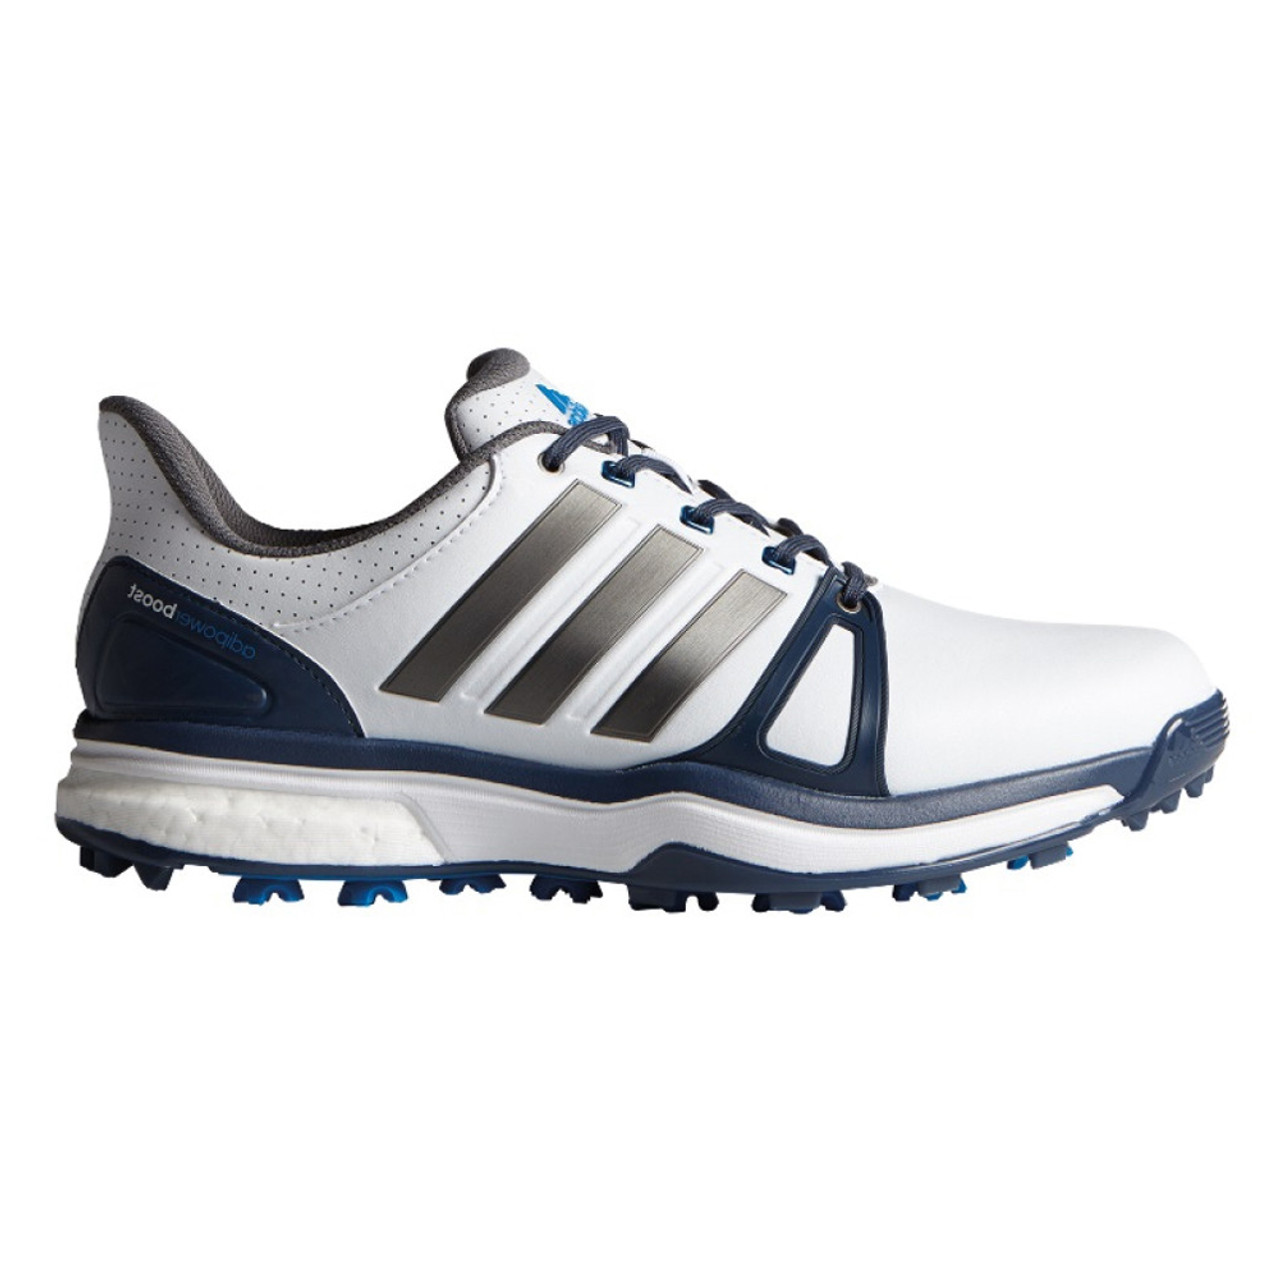 nostalgia Sociable la licenciatura Adidas Men's Adipower Boost 2 Golf Cleat - White | Discount Adidas Men's  Athletic Shoes & More - Shoolu.com | Shoolu.com